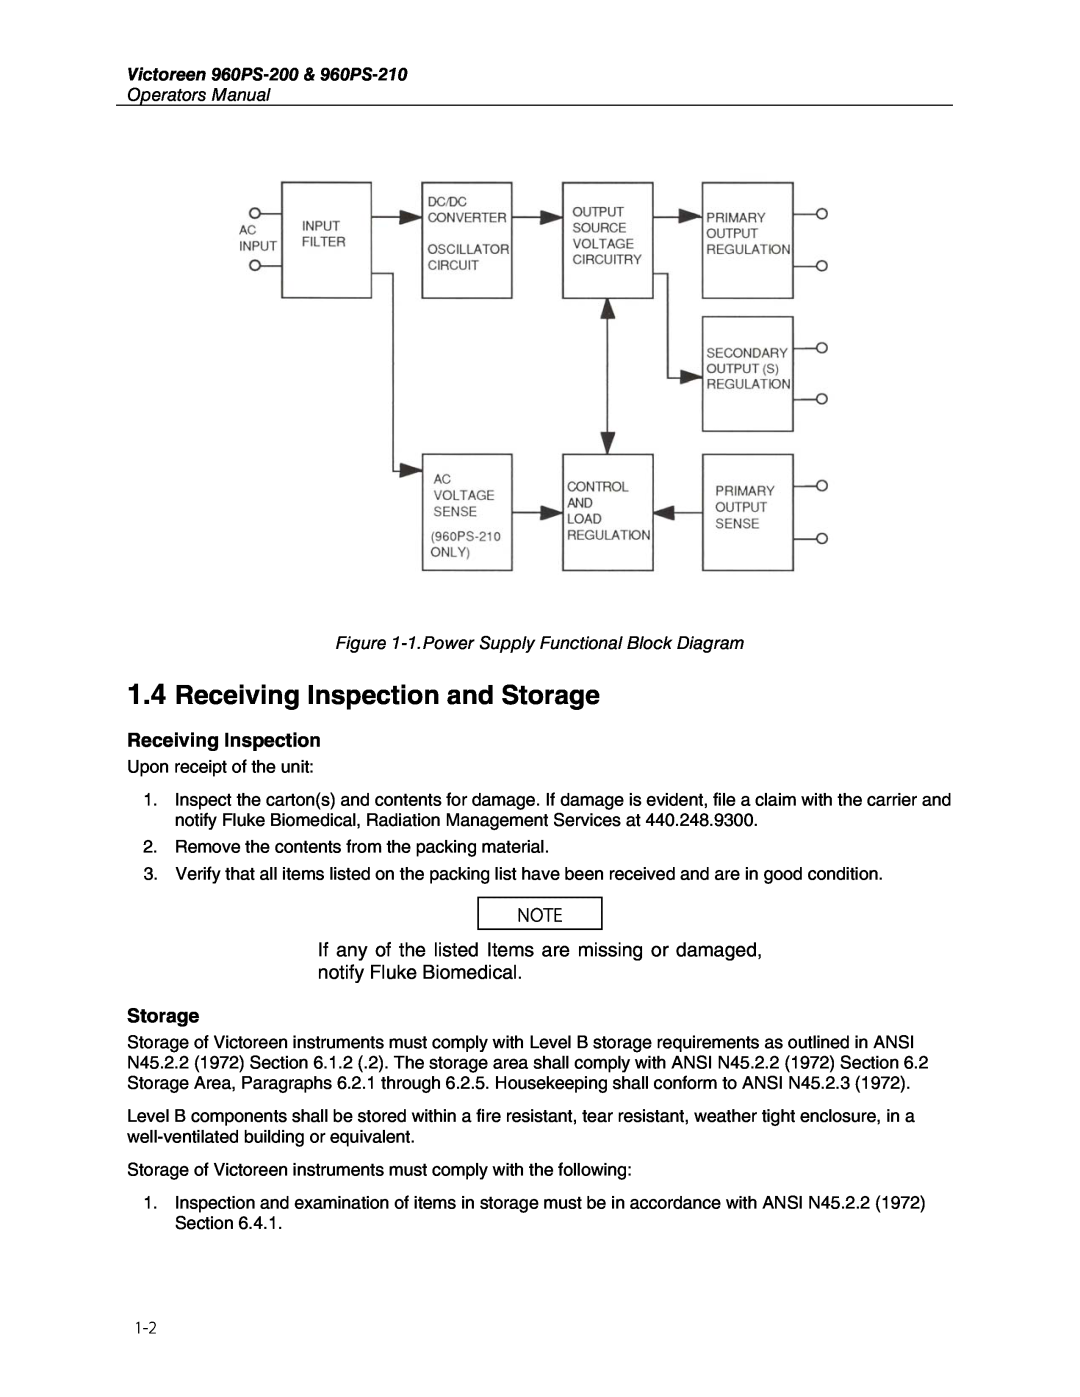 Fluke 960PS-200, 960PS-210 1.4Receiving Inspection and Storage, Operators Manual, 1.PowerSupply Functional Block Diagram 